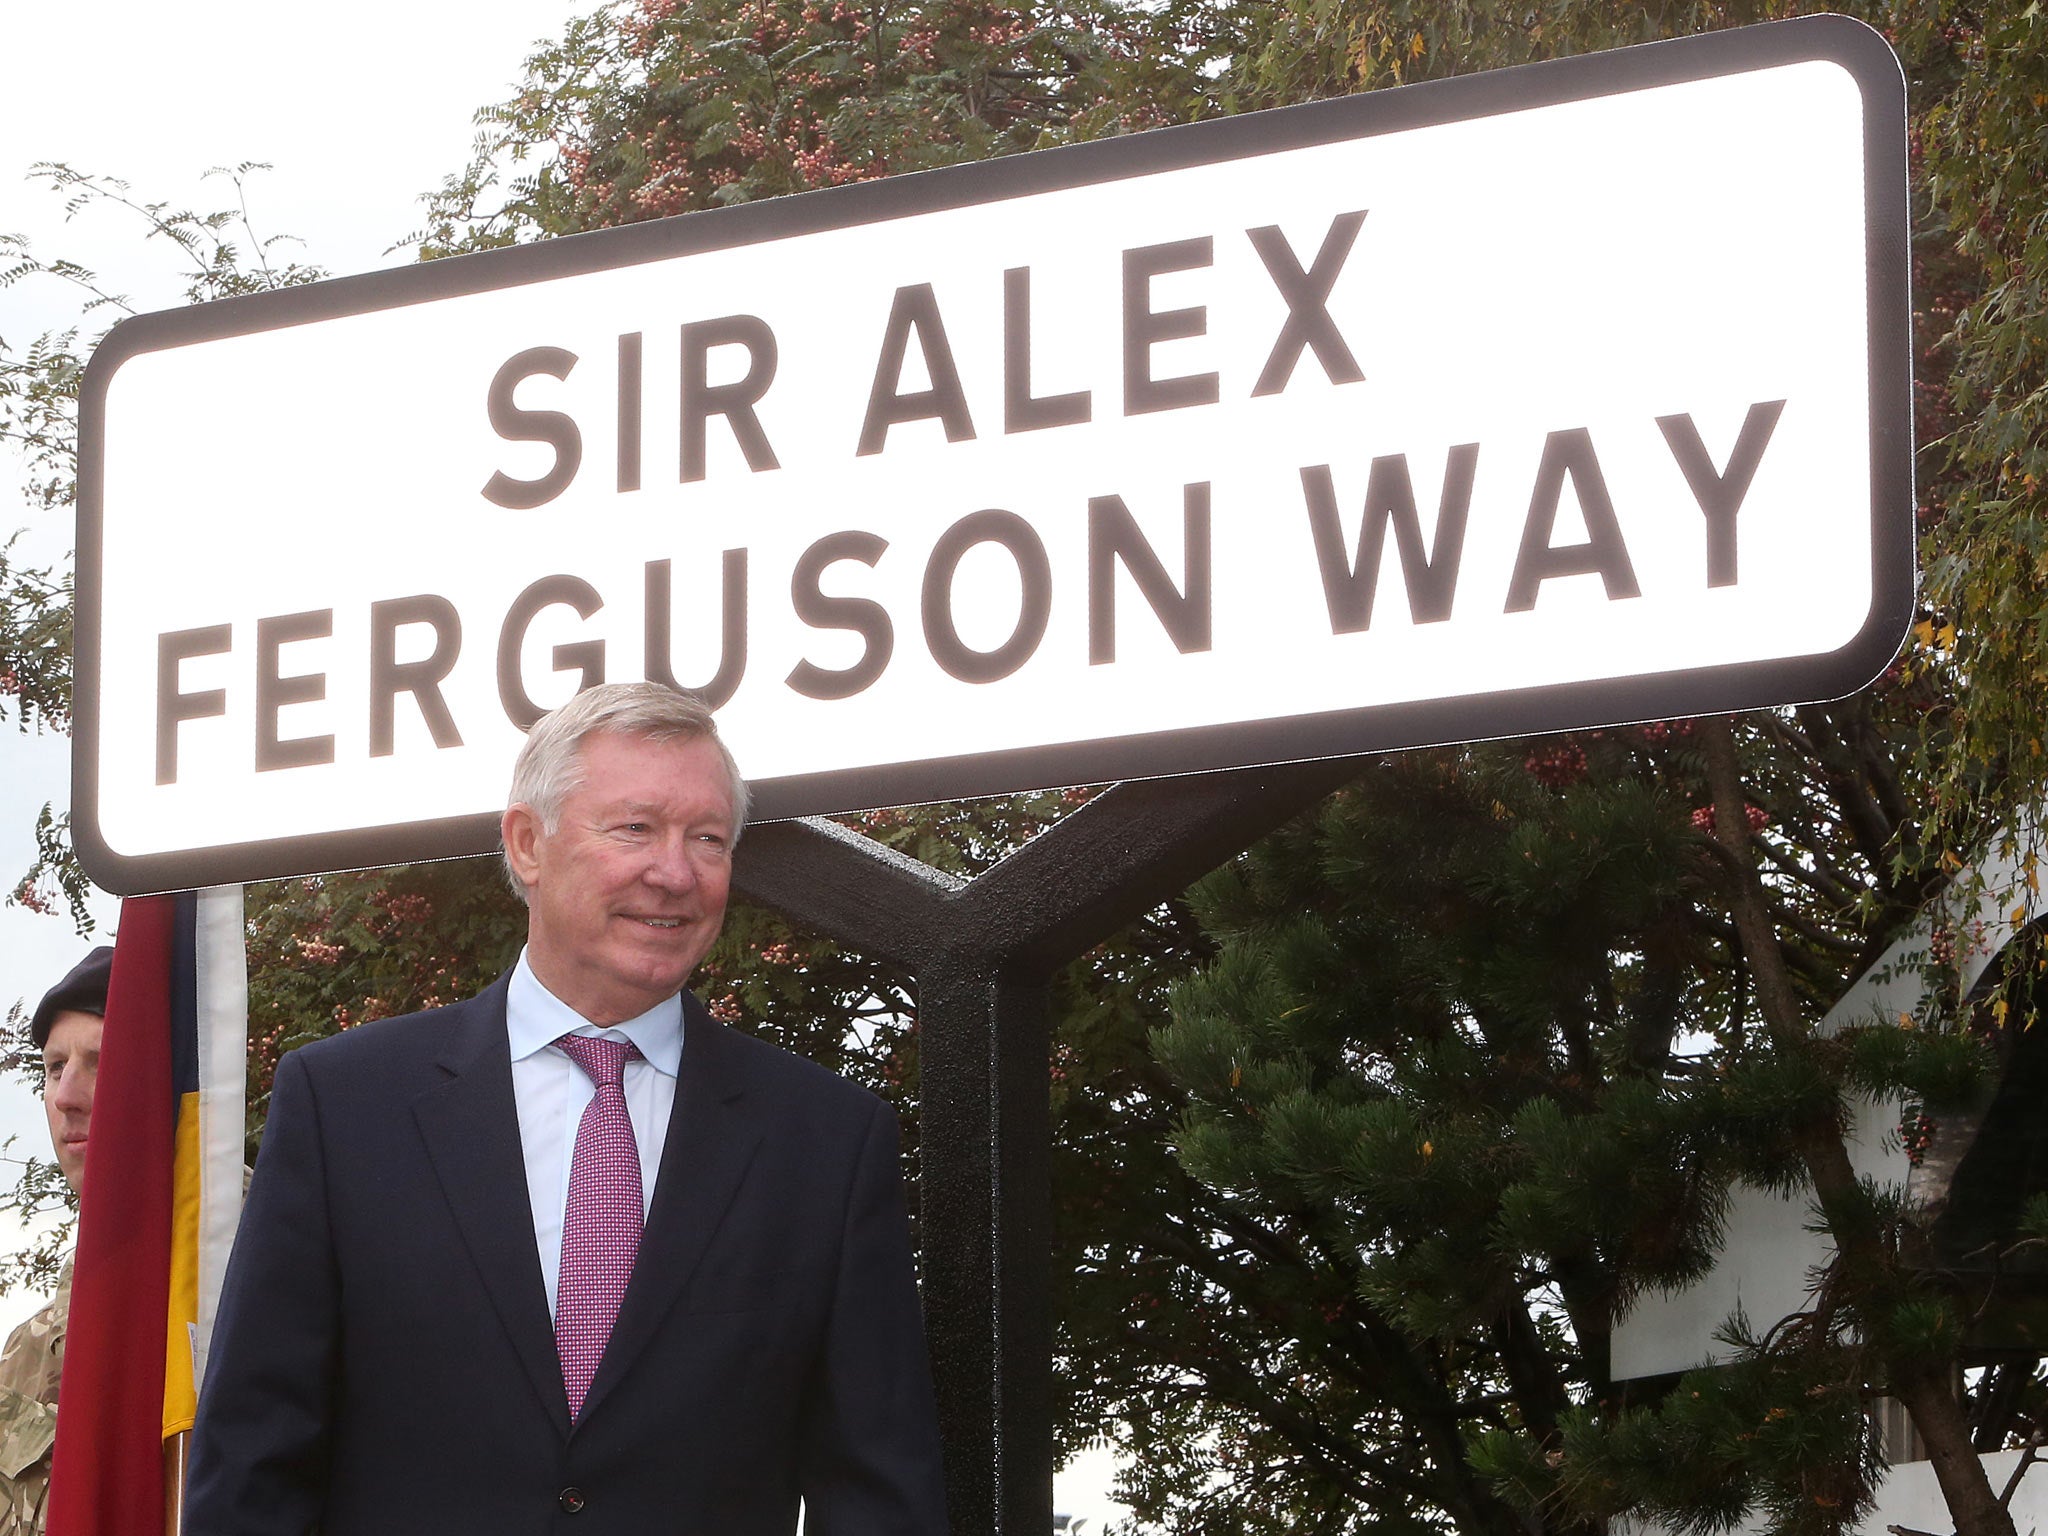 Sir Alex Ferguson poses with the street sign